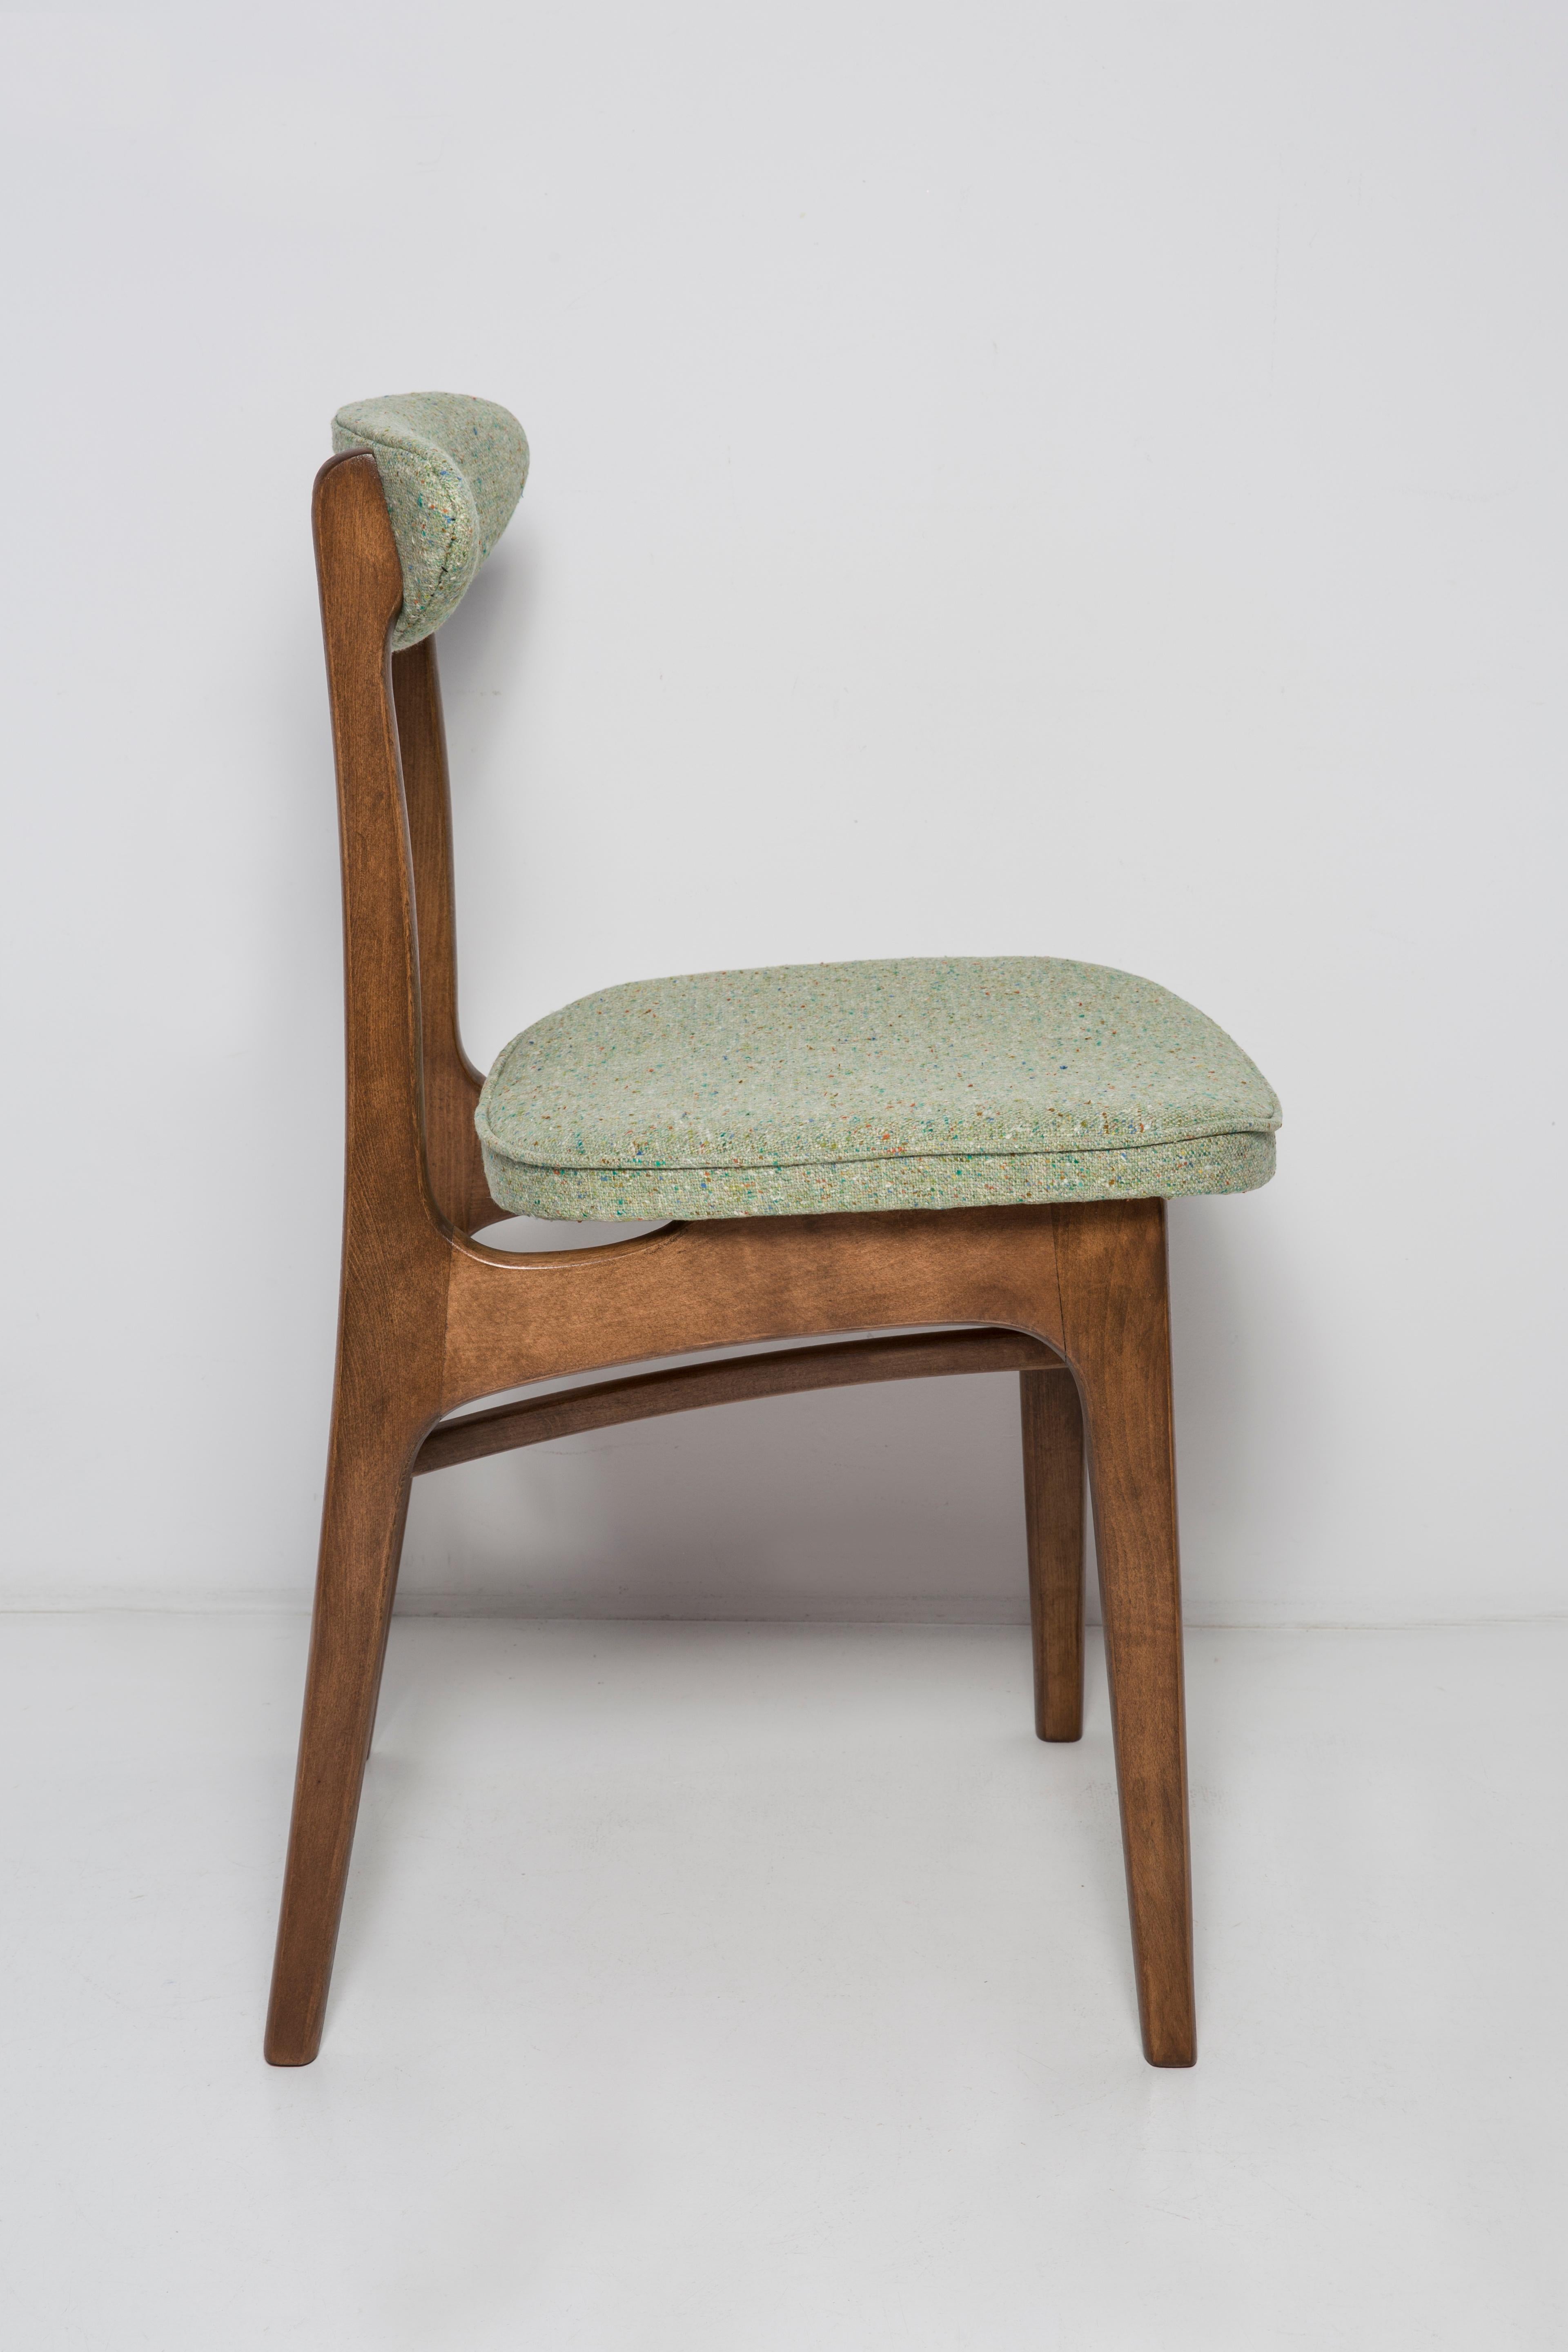 Hand-Crafted Twelve Mid Century Green Wool Chairs, Walnut Wood, Rajmund Halas, Poland, 1960s For Sale